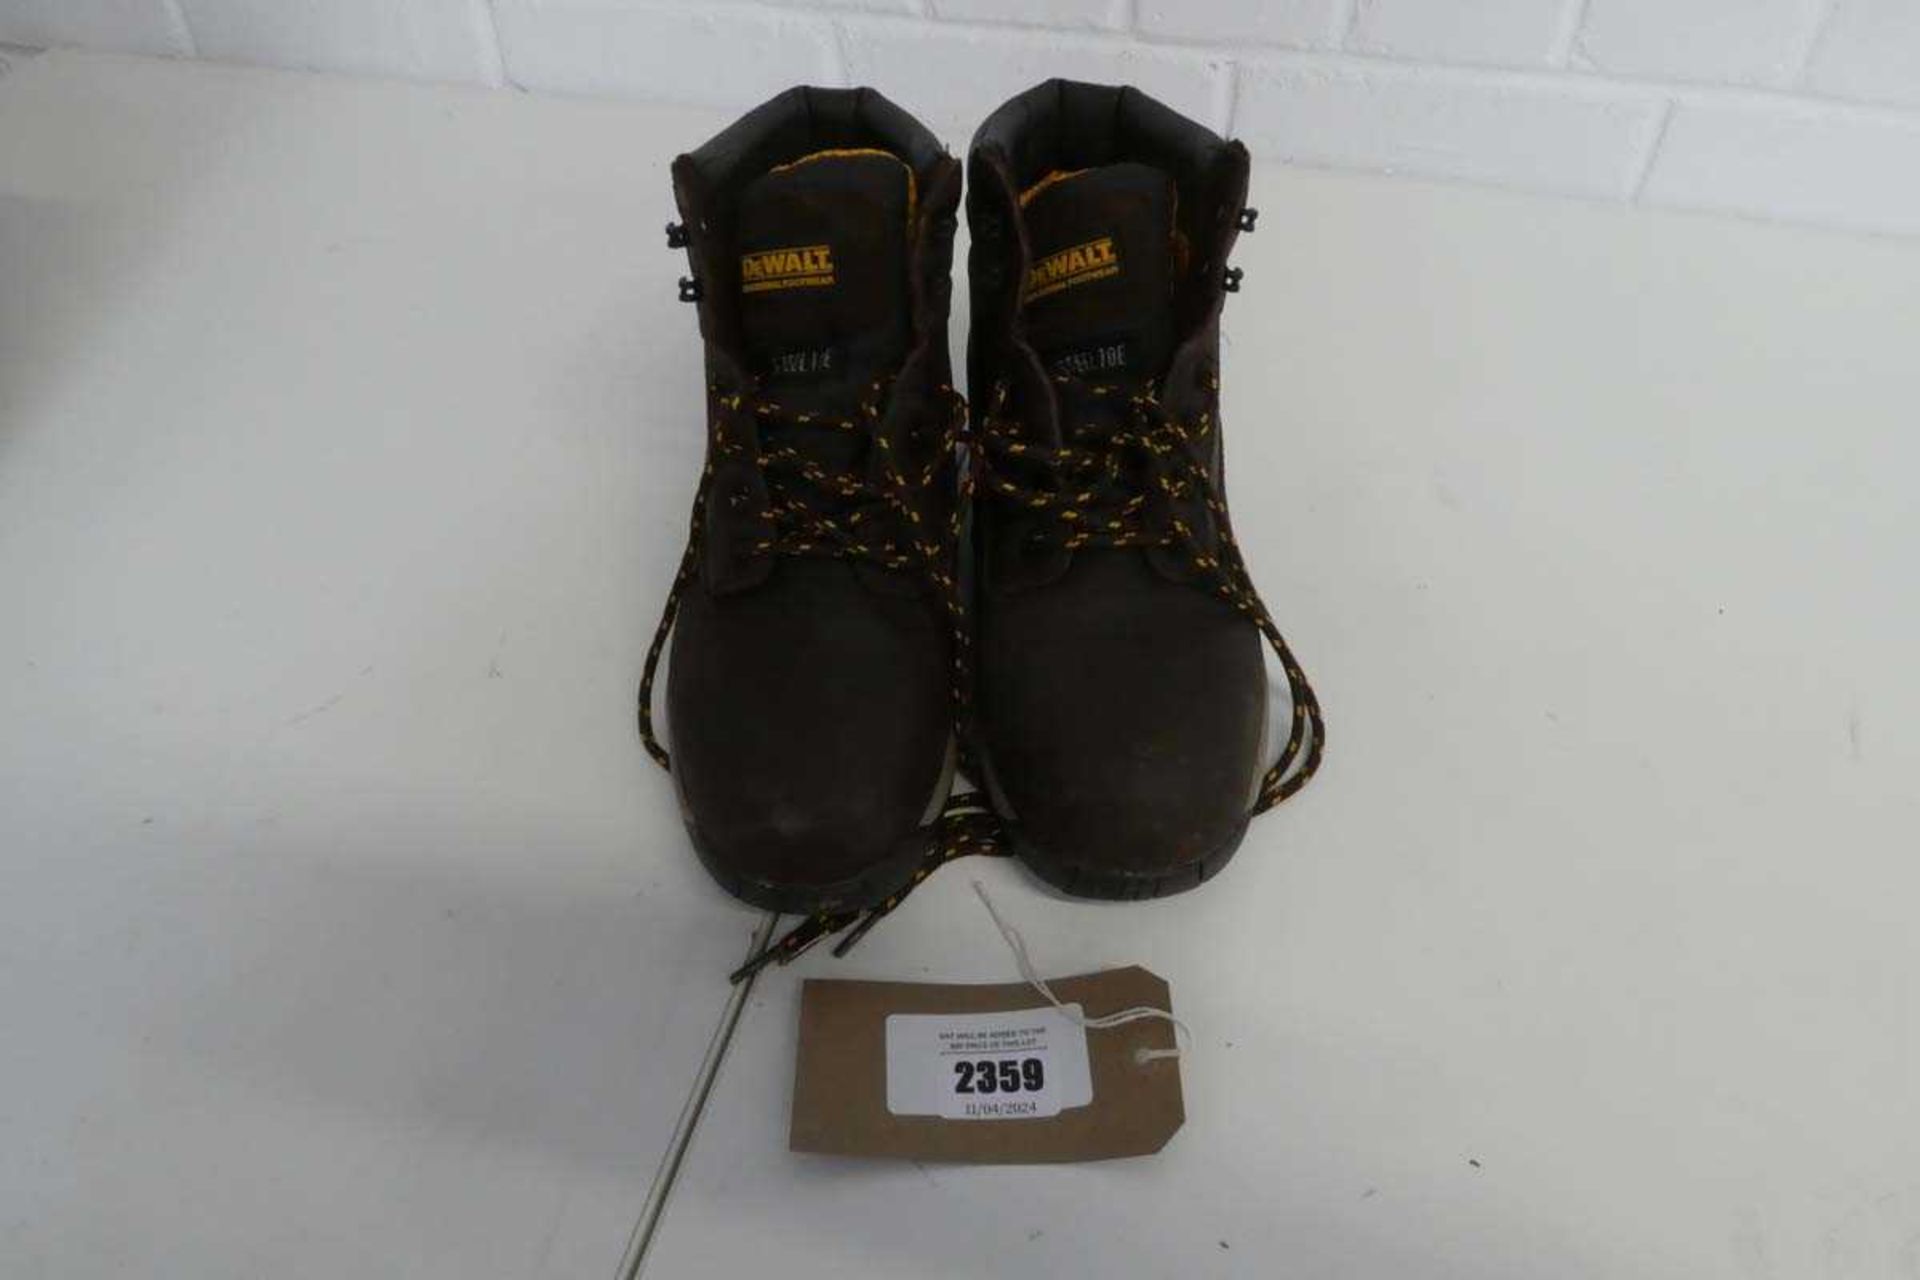 +VAT Pair of mens Dewalt work boots in brown size 8